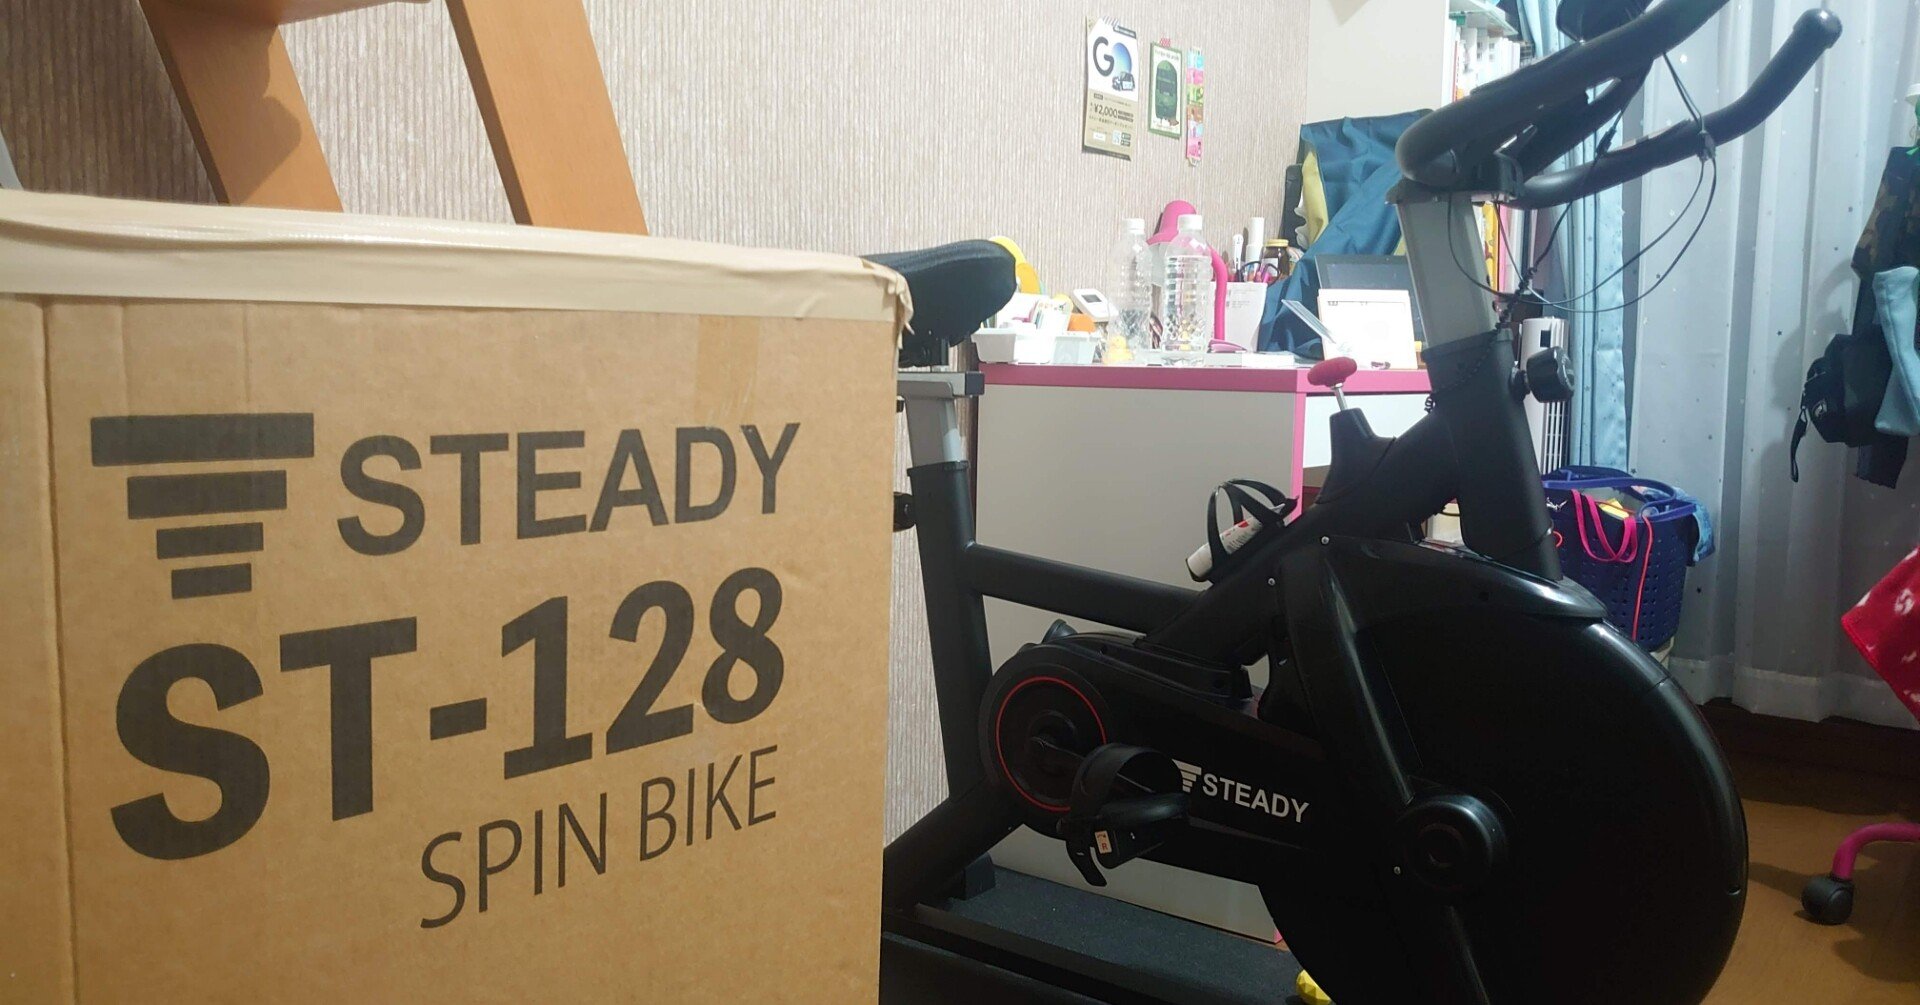 Steady スピンバイク ST-128 白